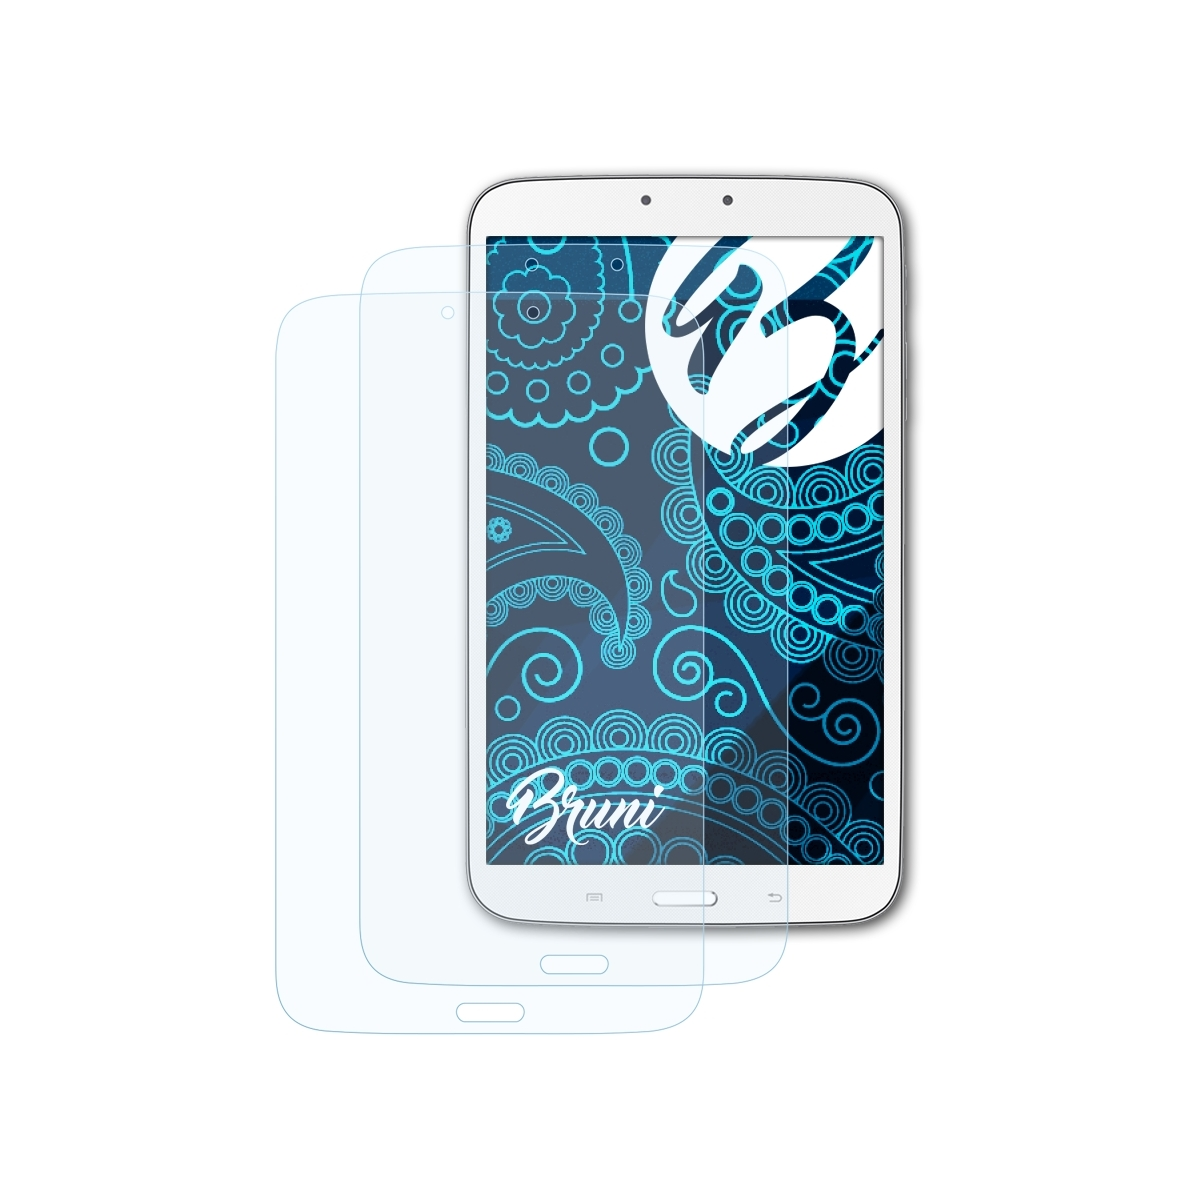 BRUNI 2x Basics-Clear Schutzfolie(für 3 8.0 Tab SM-T3100)) (WiFi Galaxy Samsung